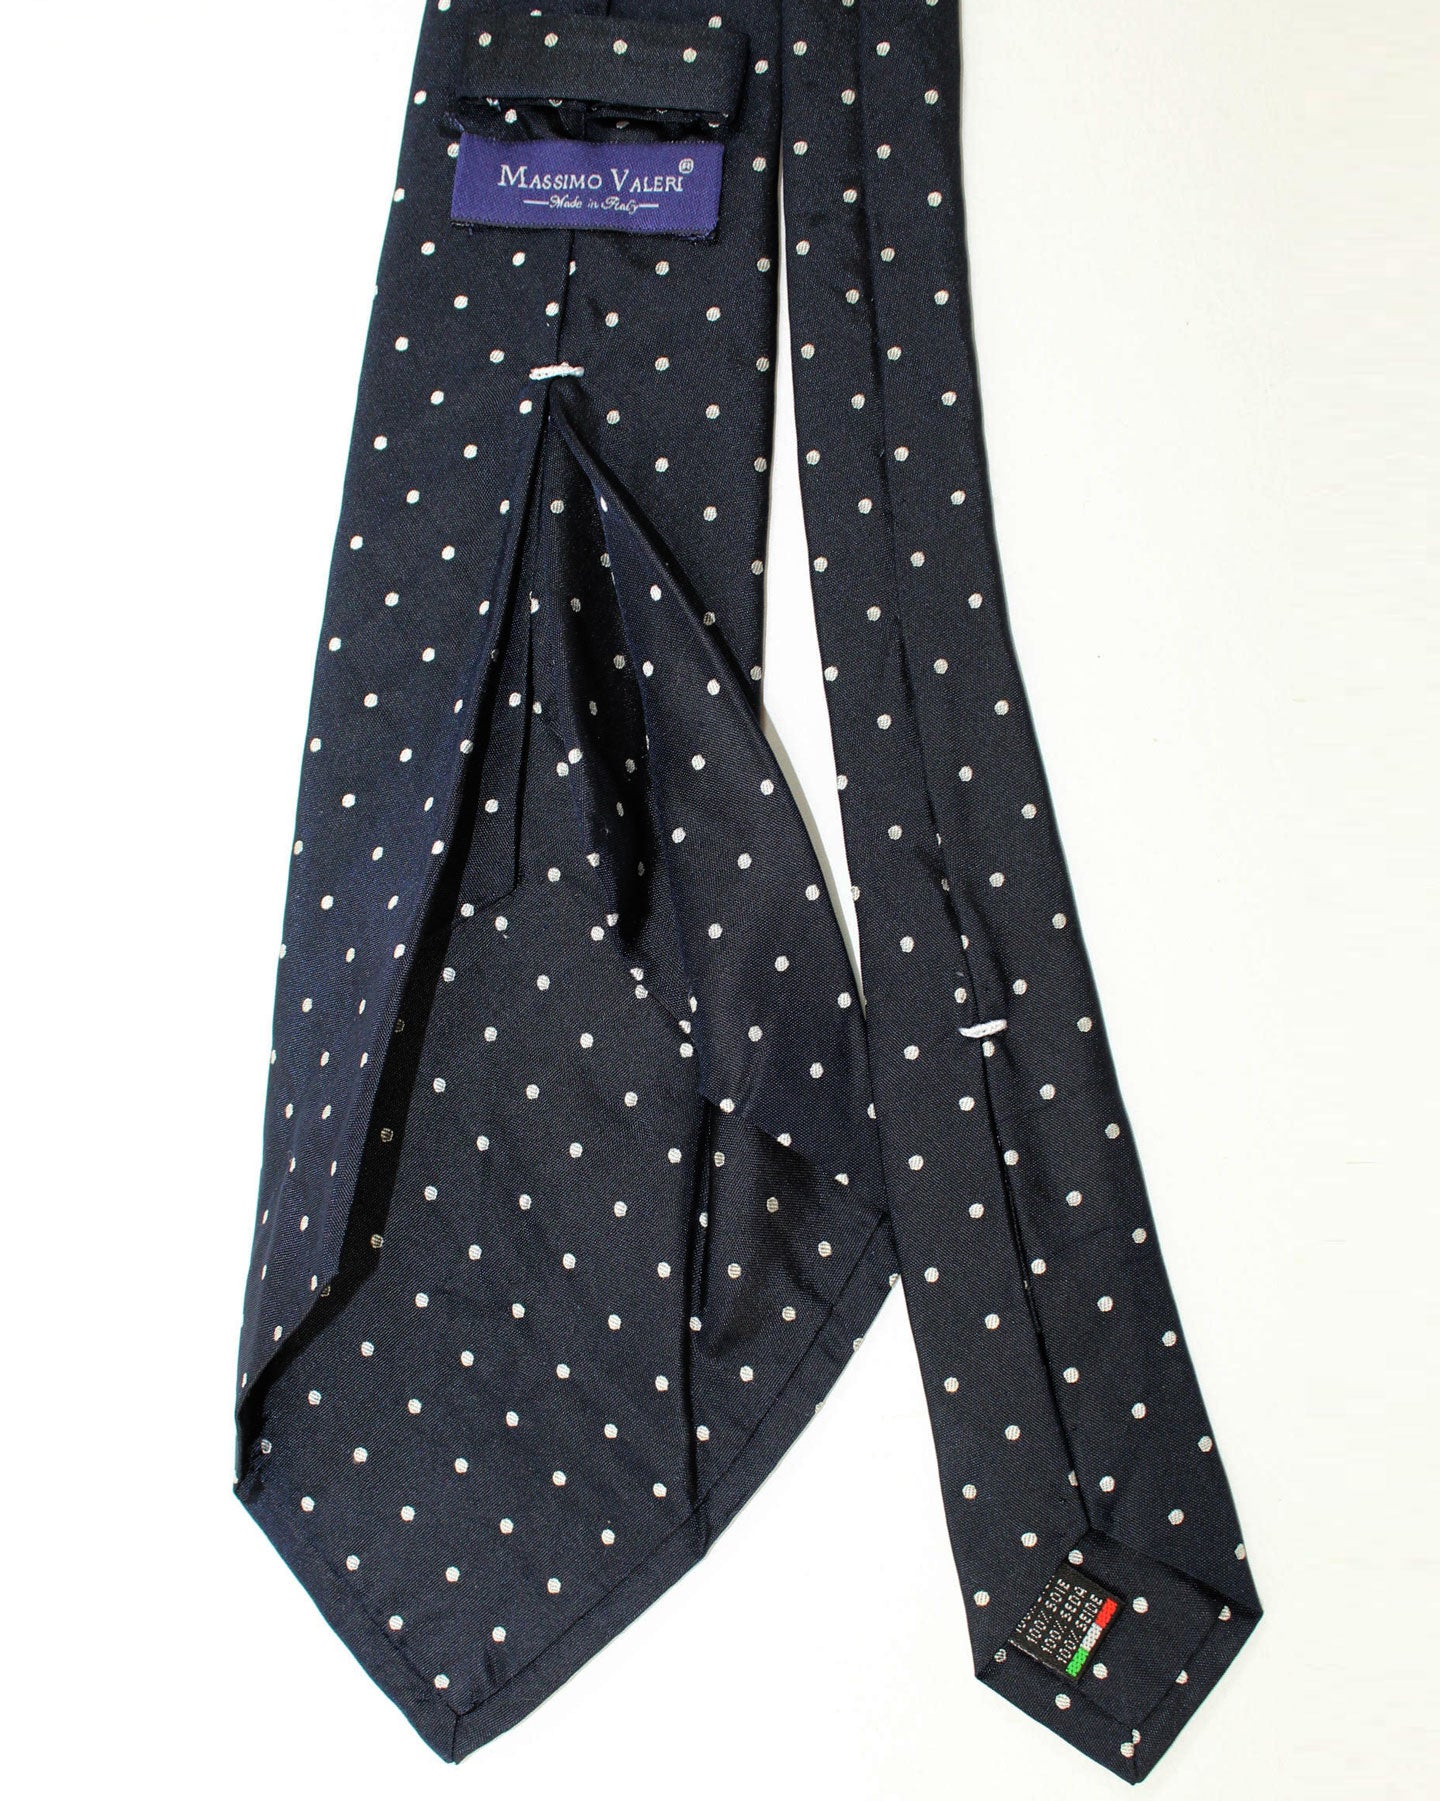 Massimo Valeri 11 Fold Tie Dark Blue Silver Dots - Elevenfold Necktie